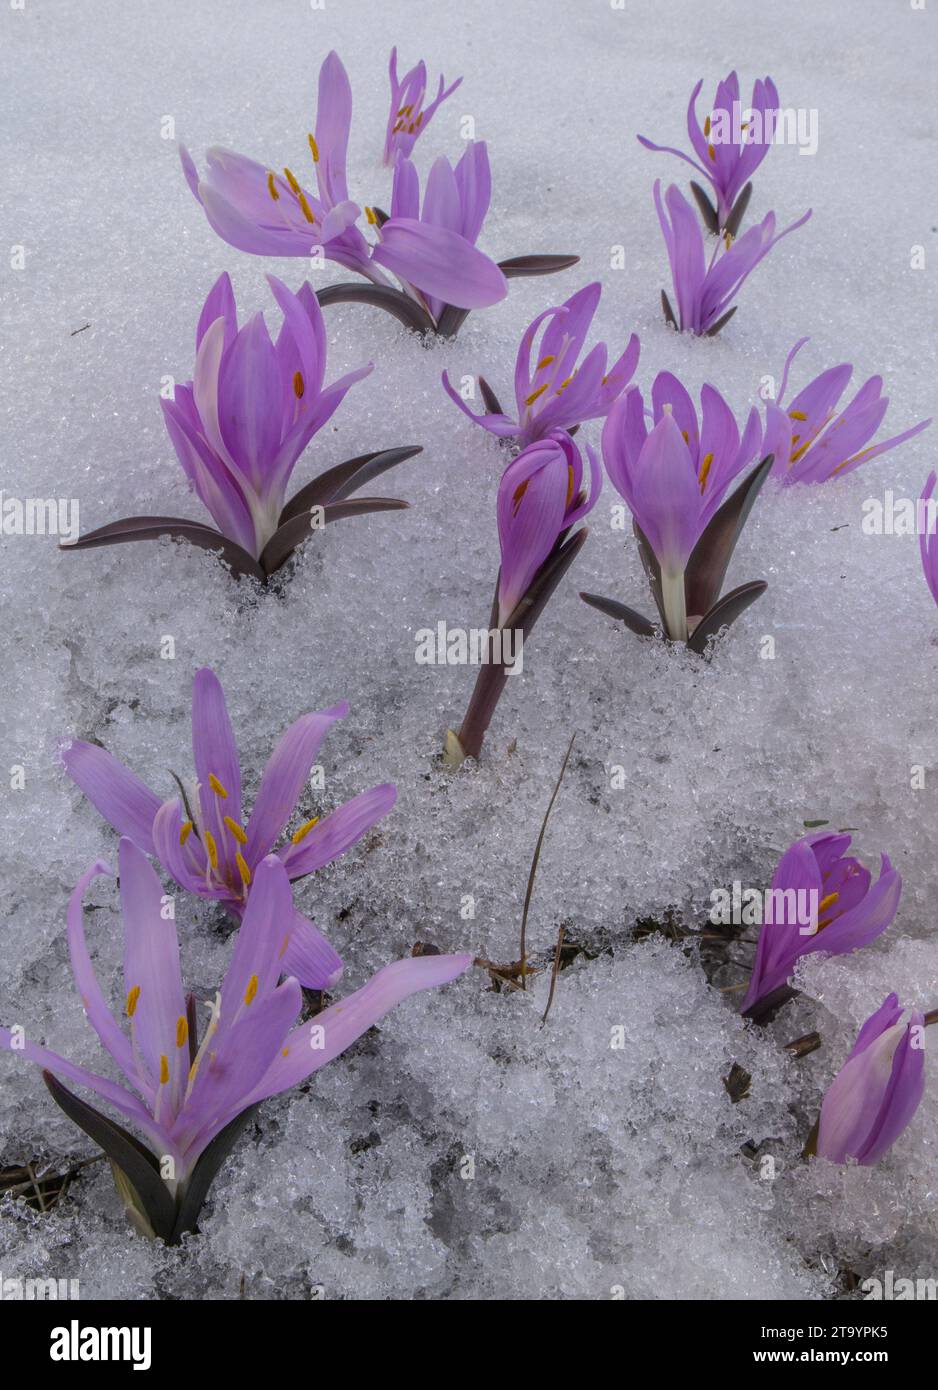 Photo: Abri Balcon hiver winter 02, Rocaille Echirolles Abri album, Le  Fakir